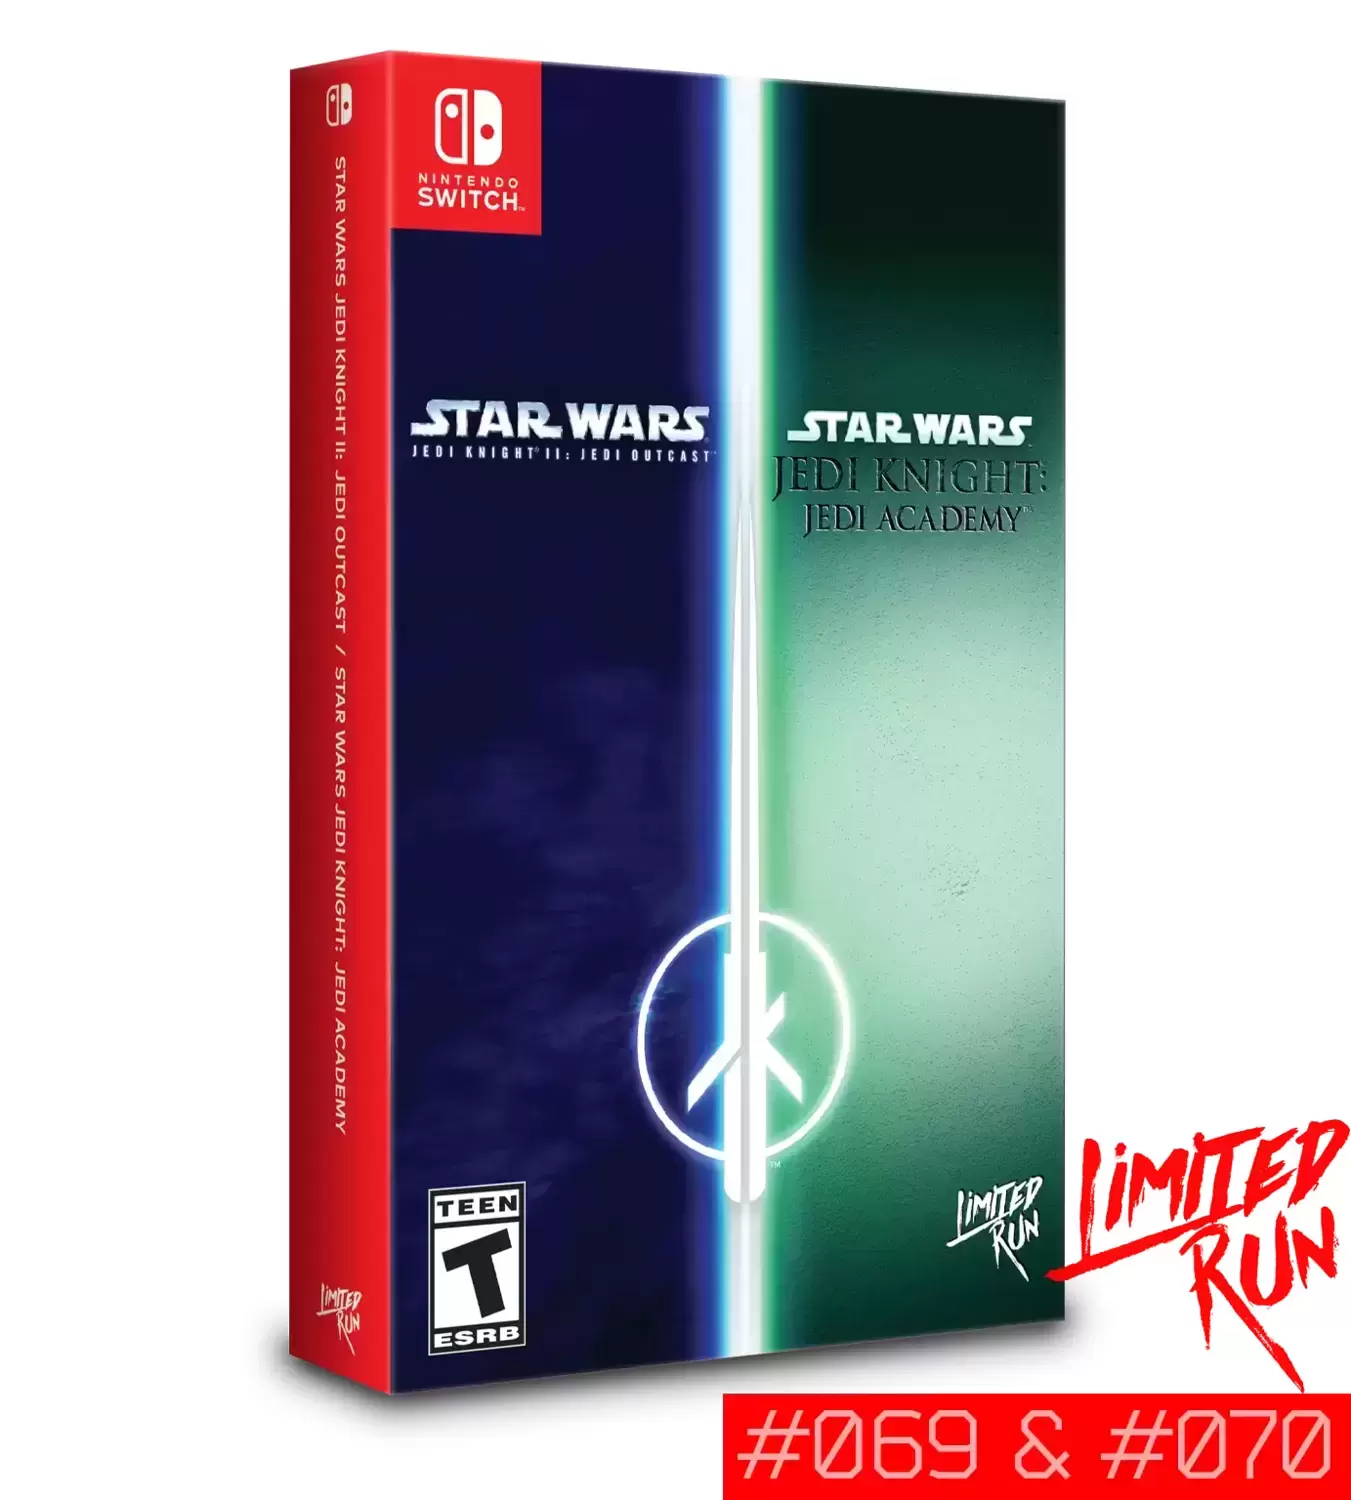 Jeux Nintendo Switch - Bundle Star Wars Jedi Knight & Jedi Knight II - Limited Run Games #069 & #070